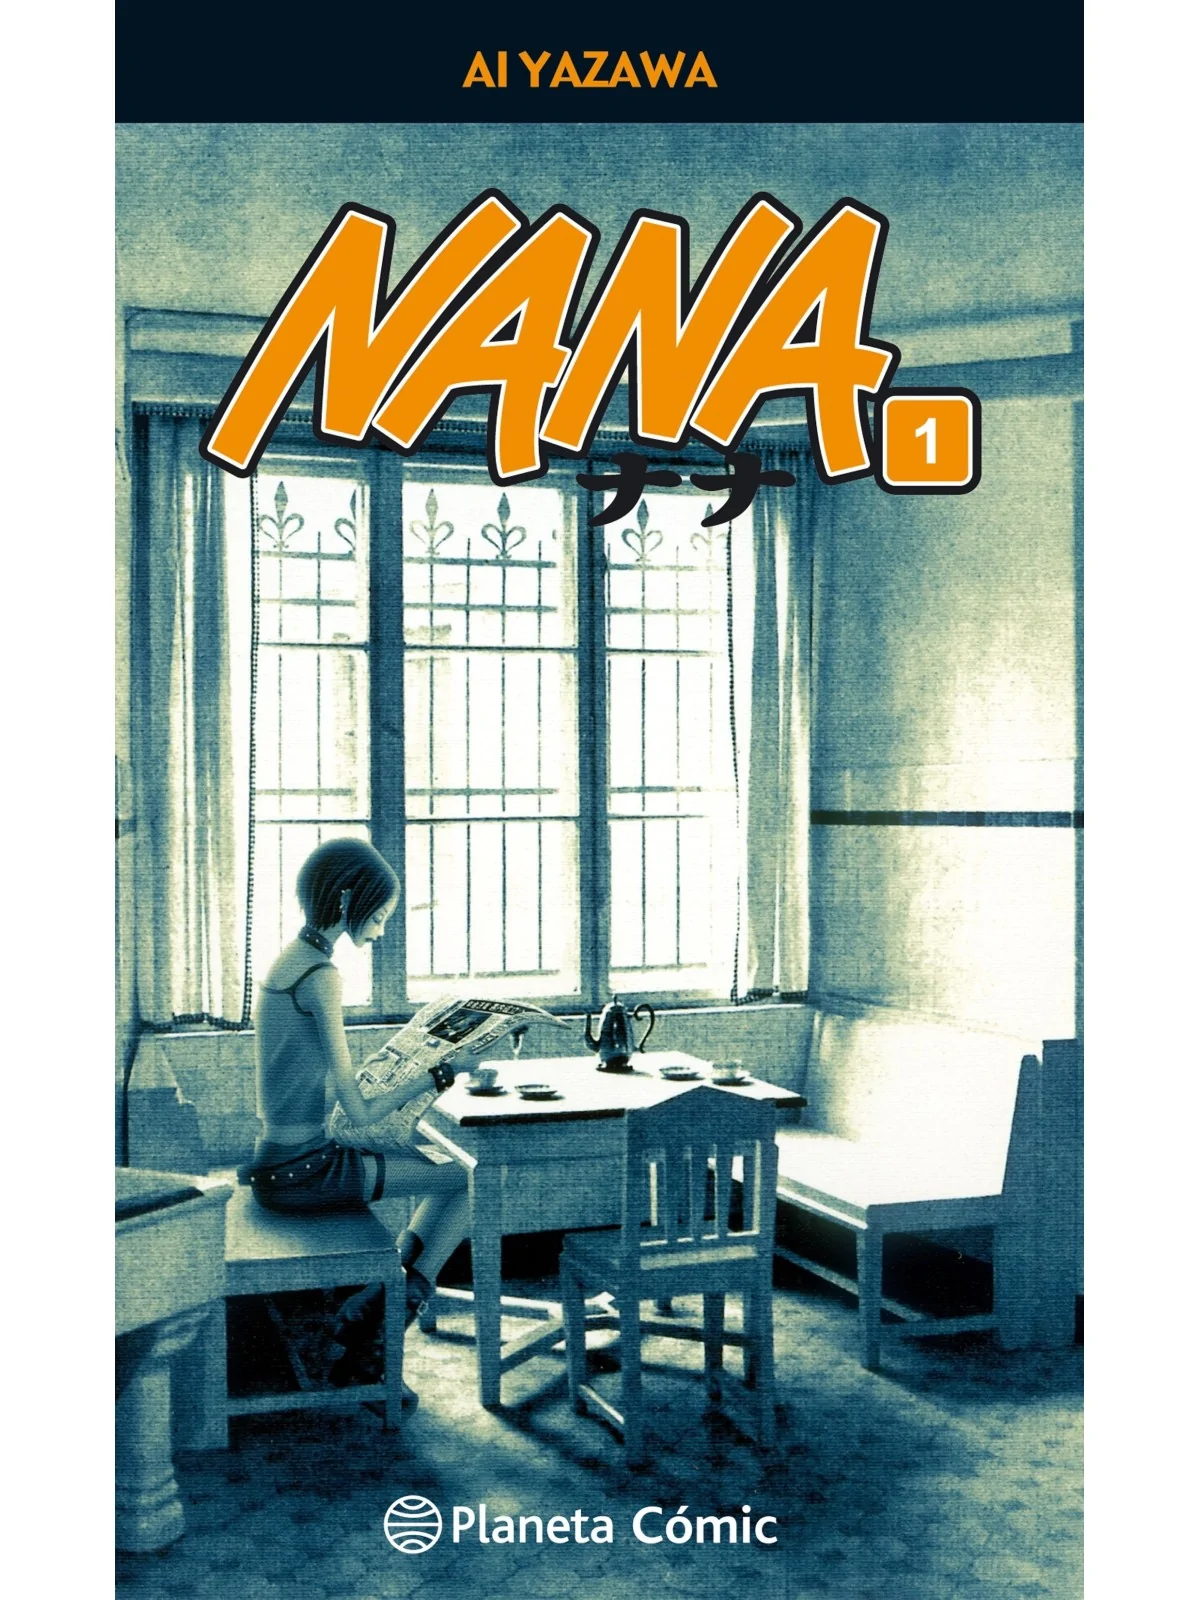 Comprar Nana 1 barato al mejor precio 8,51 € de Planeta Comic